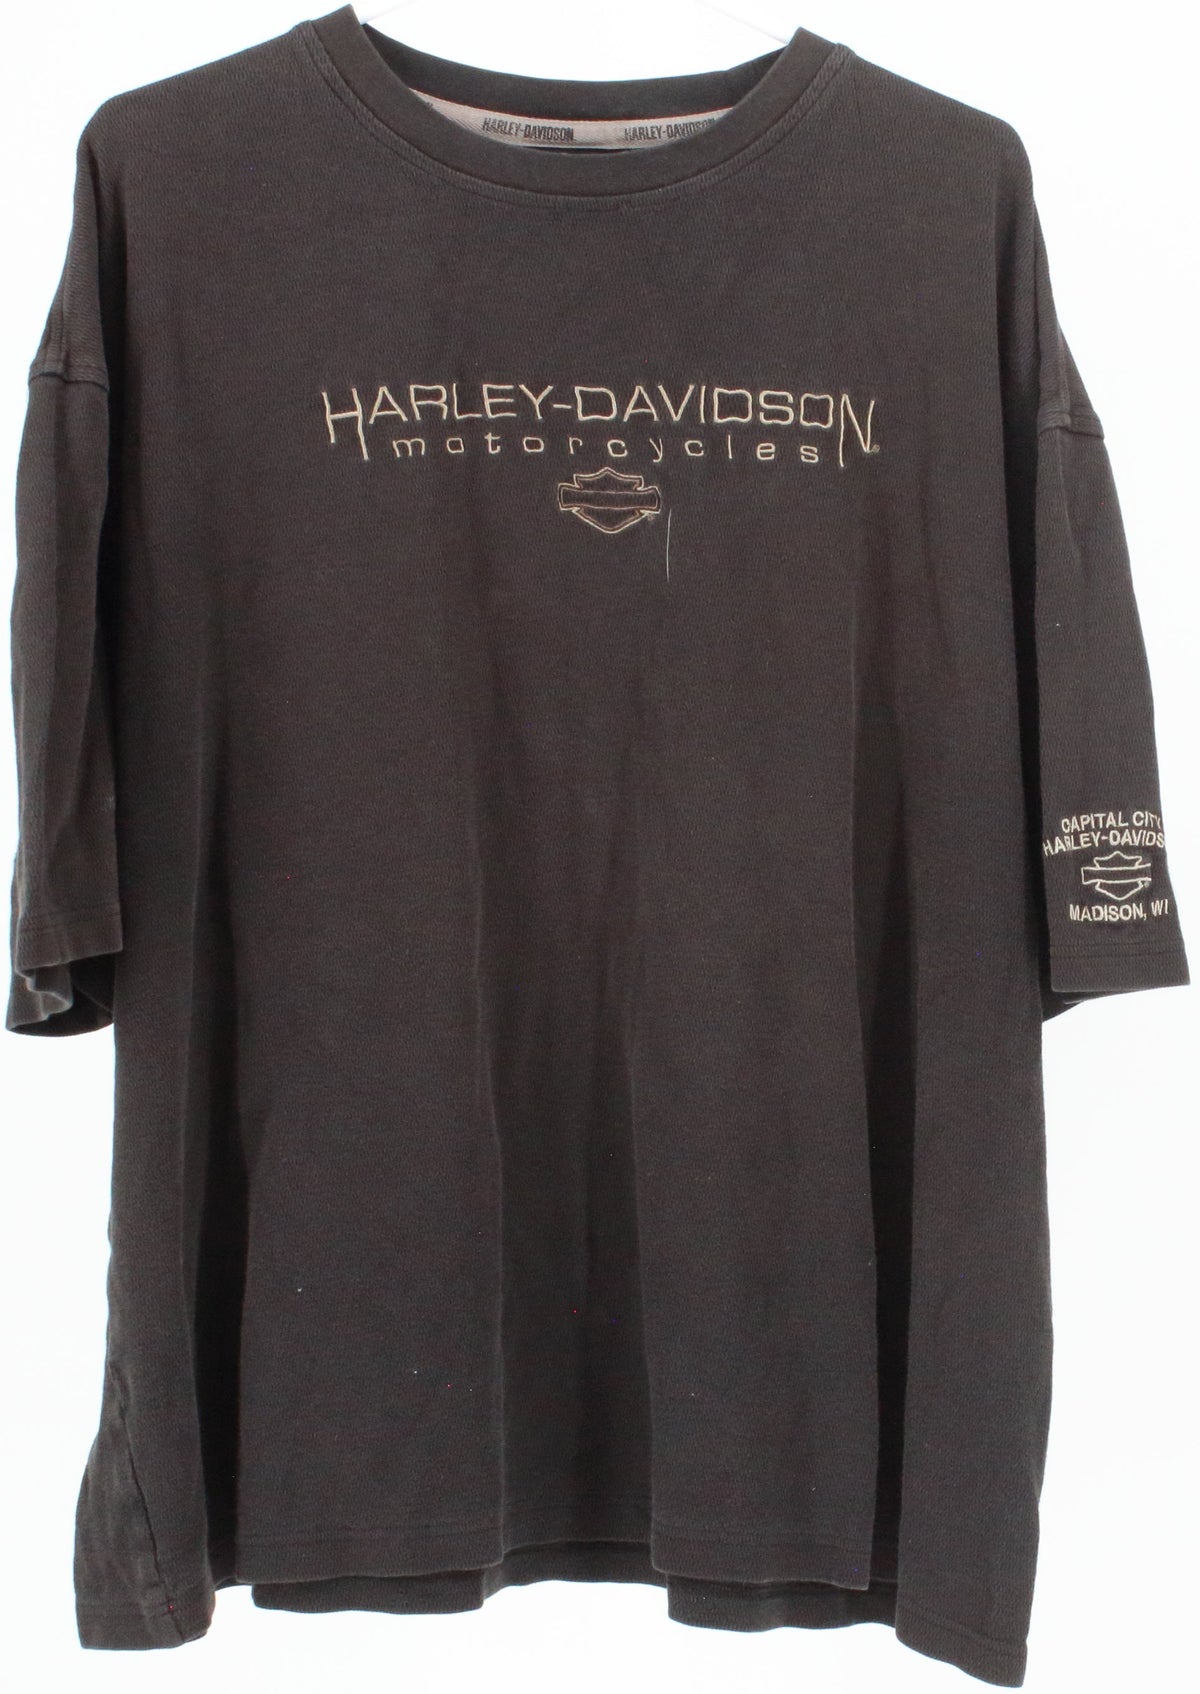 Harley Davidson Motorcycles Capital City Black Heavyweight T-Shirt